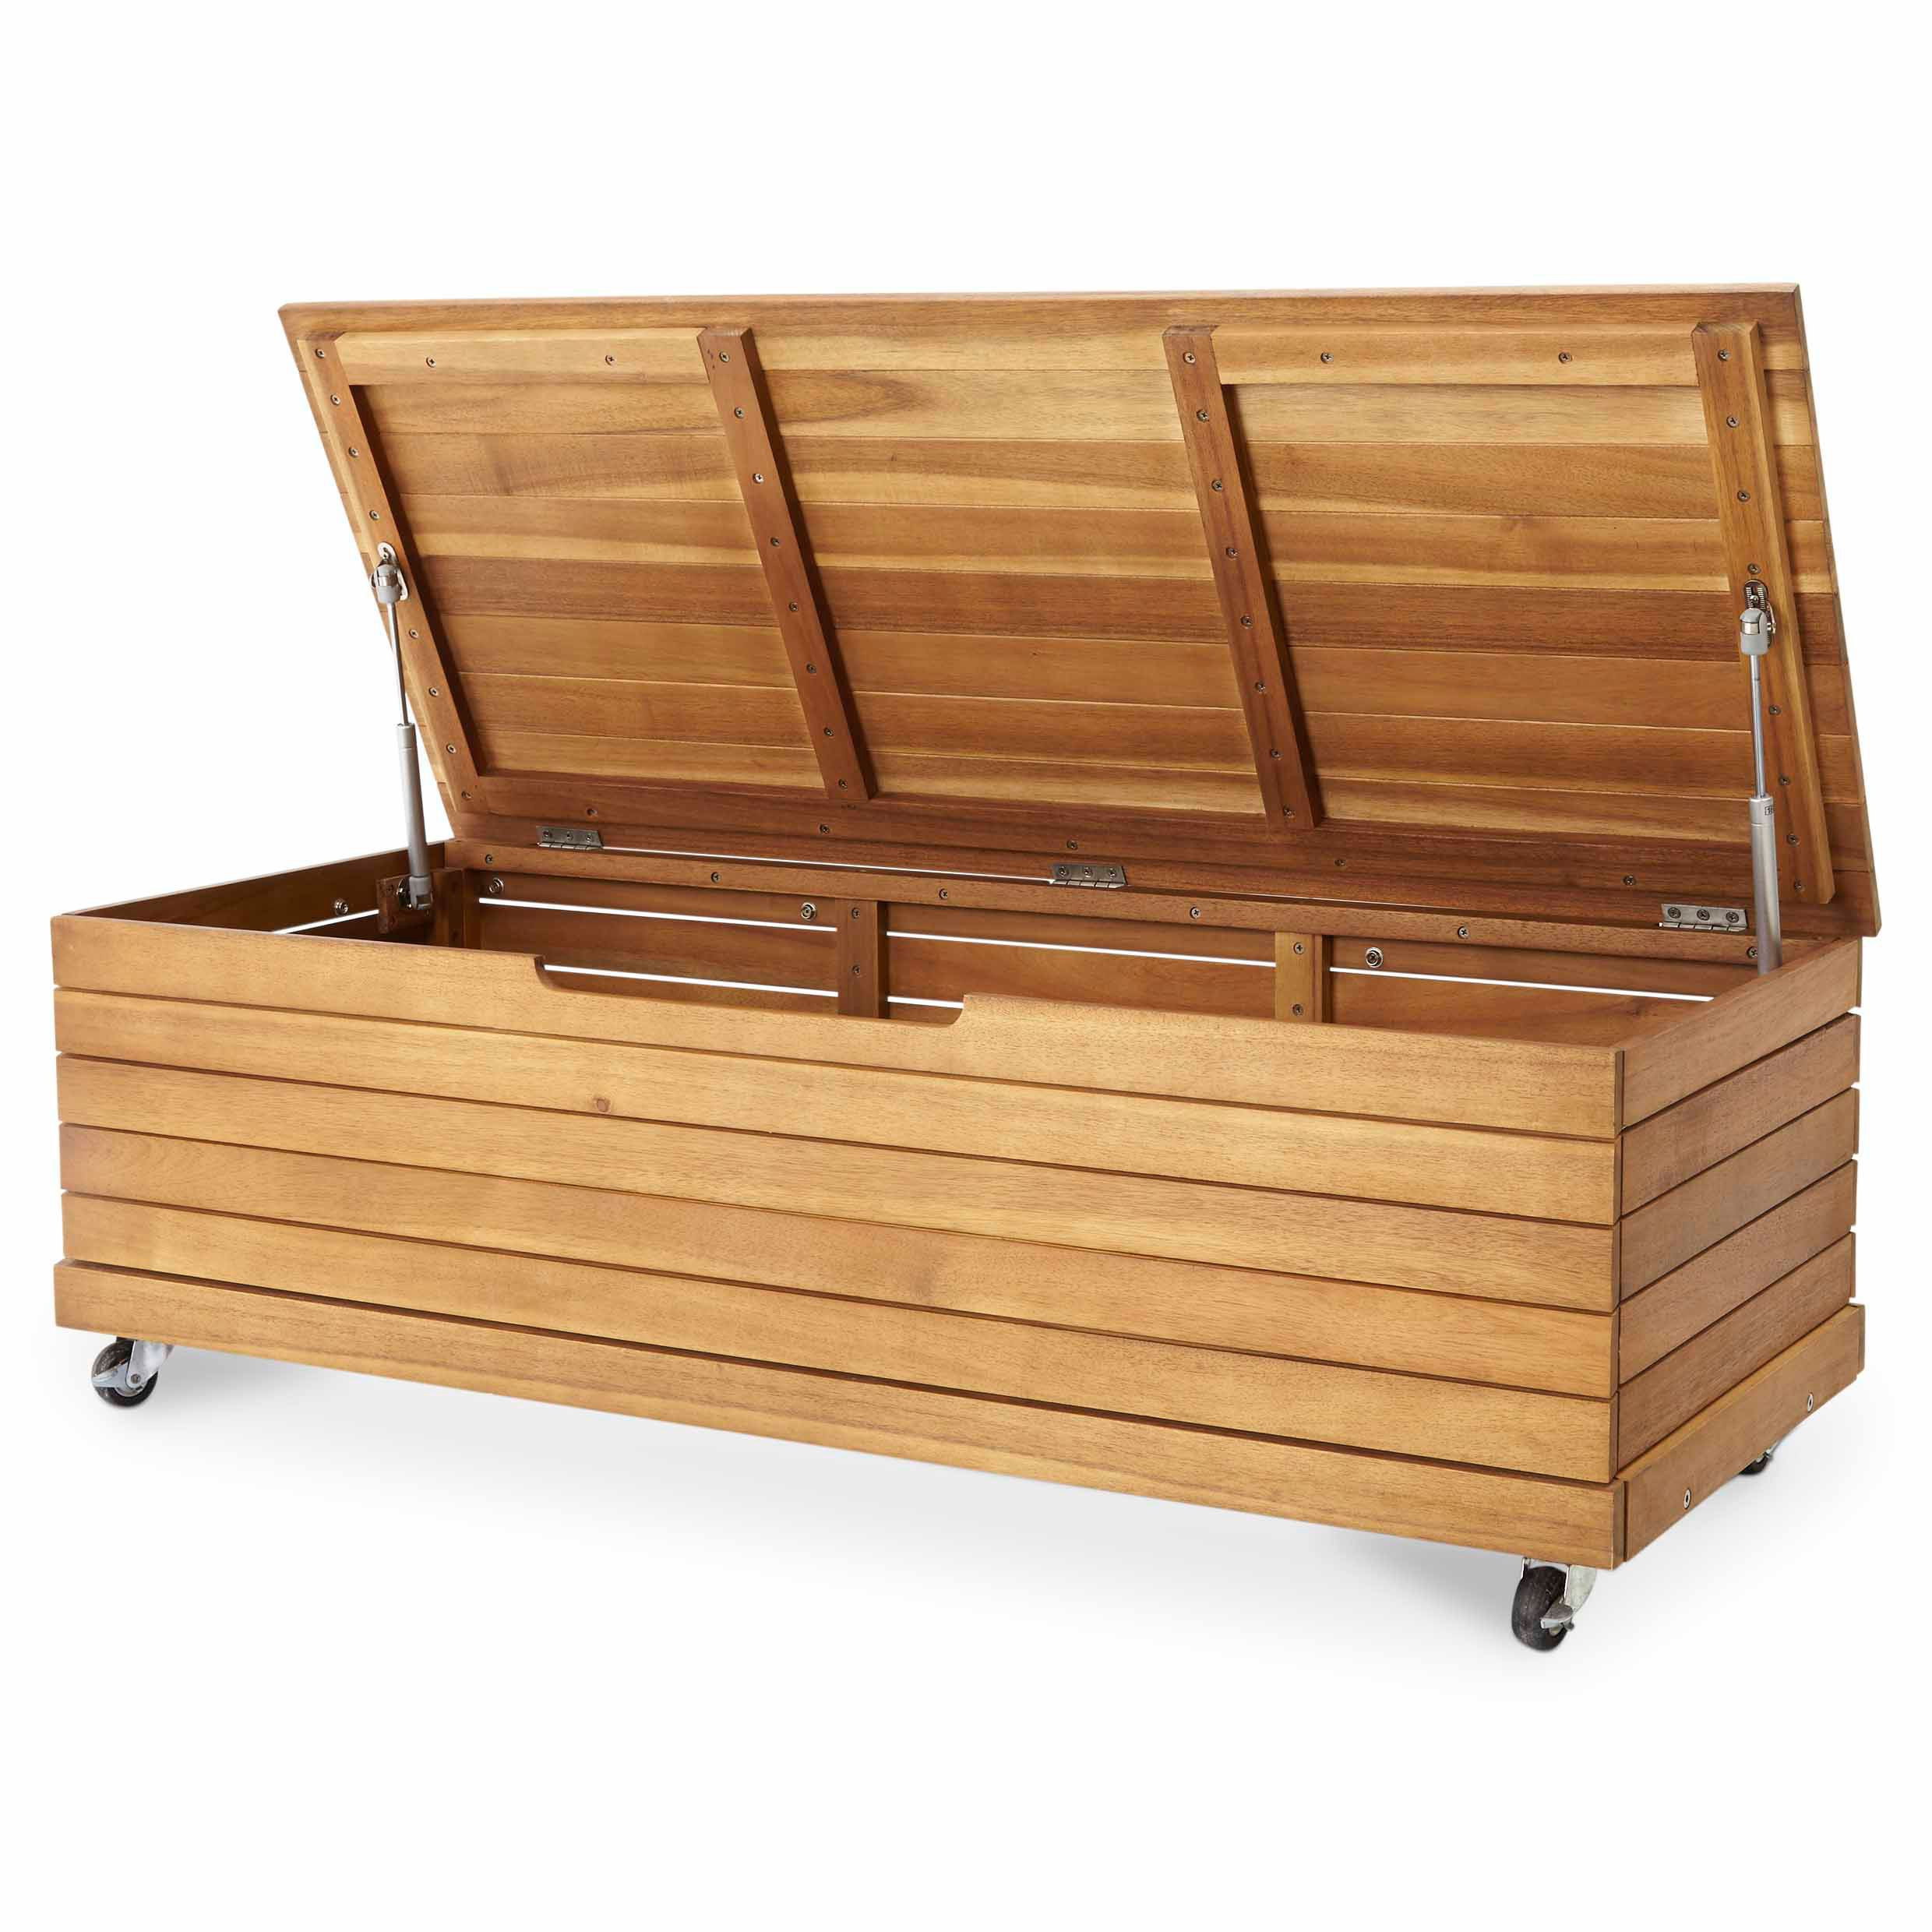 Best ideas about DIY Wooden Storage Boxes
. Save or Pin Denia Wooden Garden storage box Departments Now.